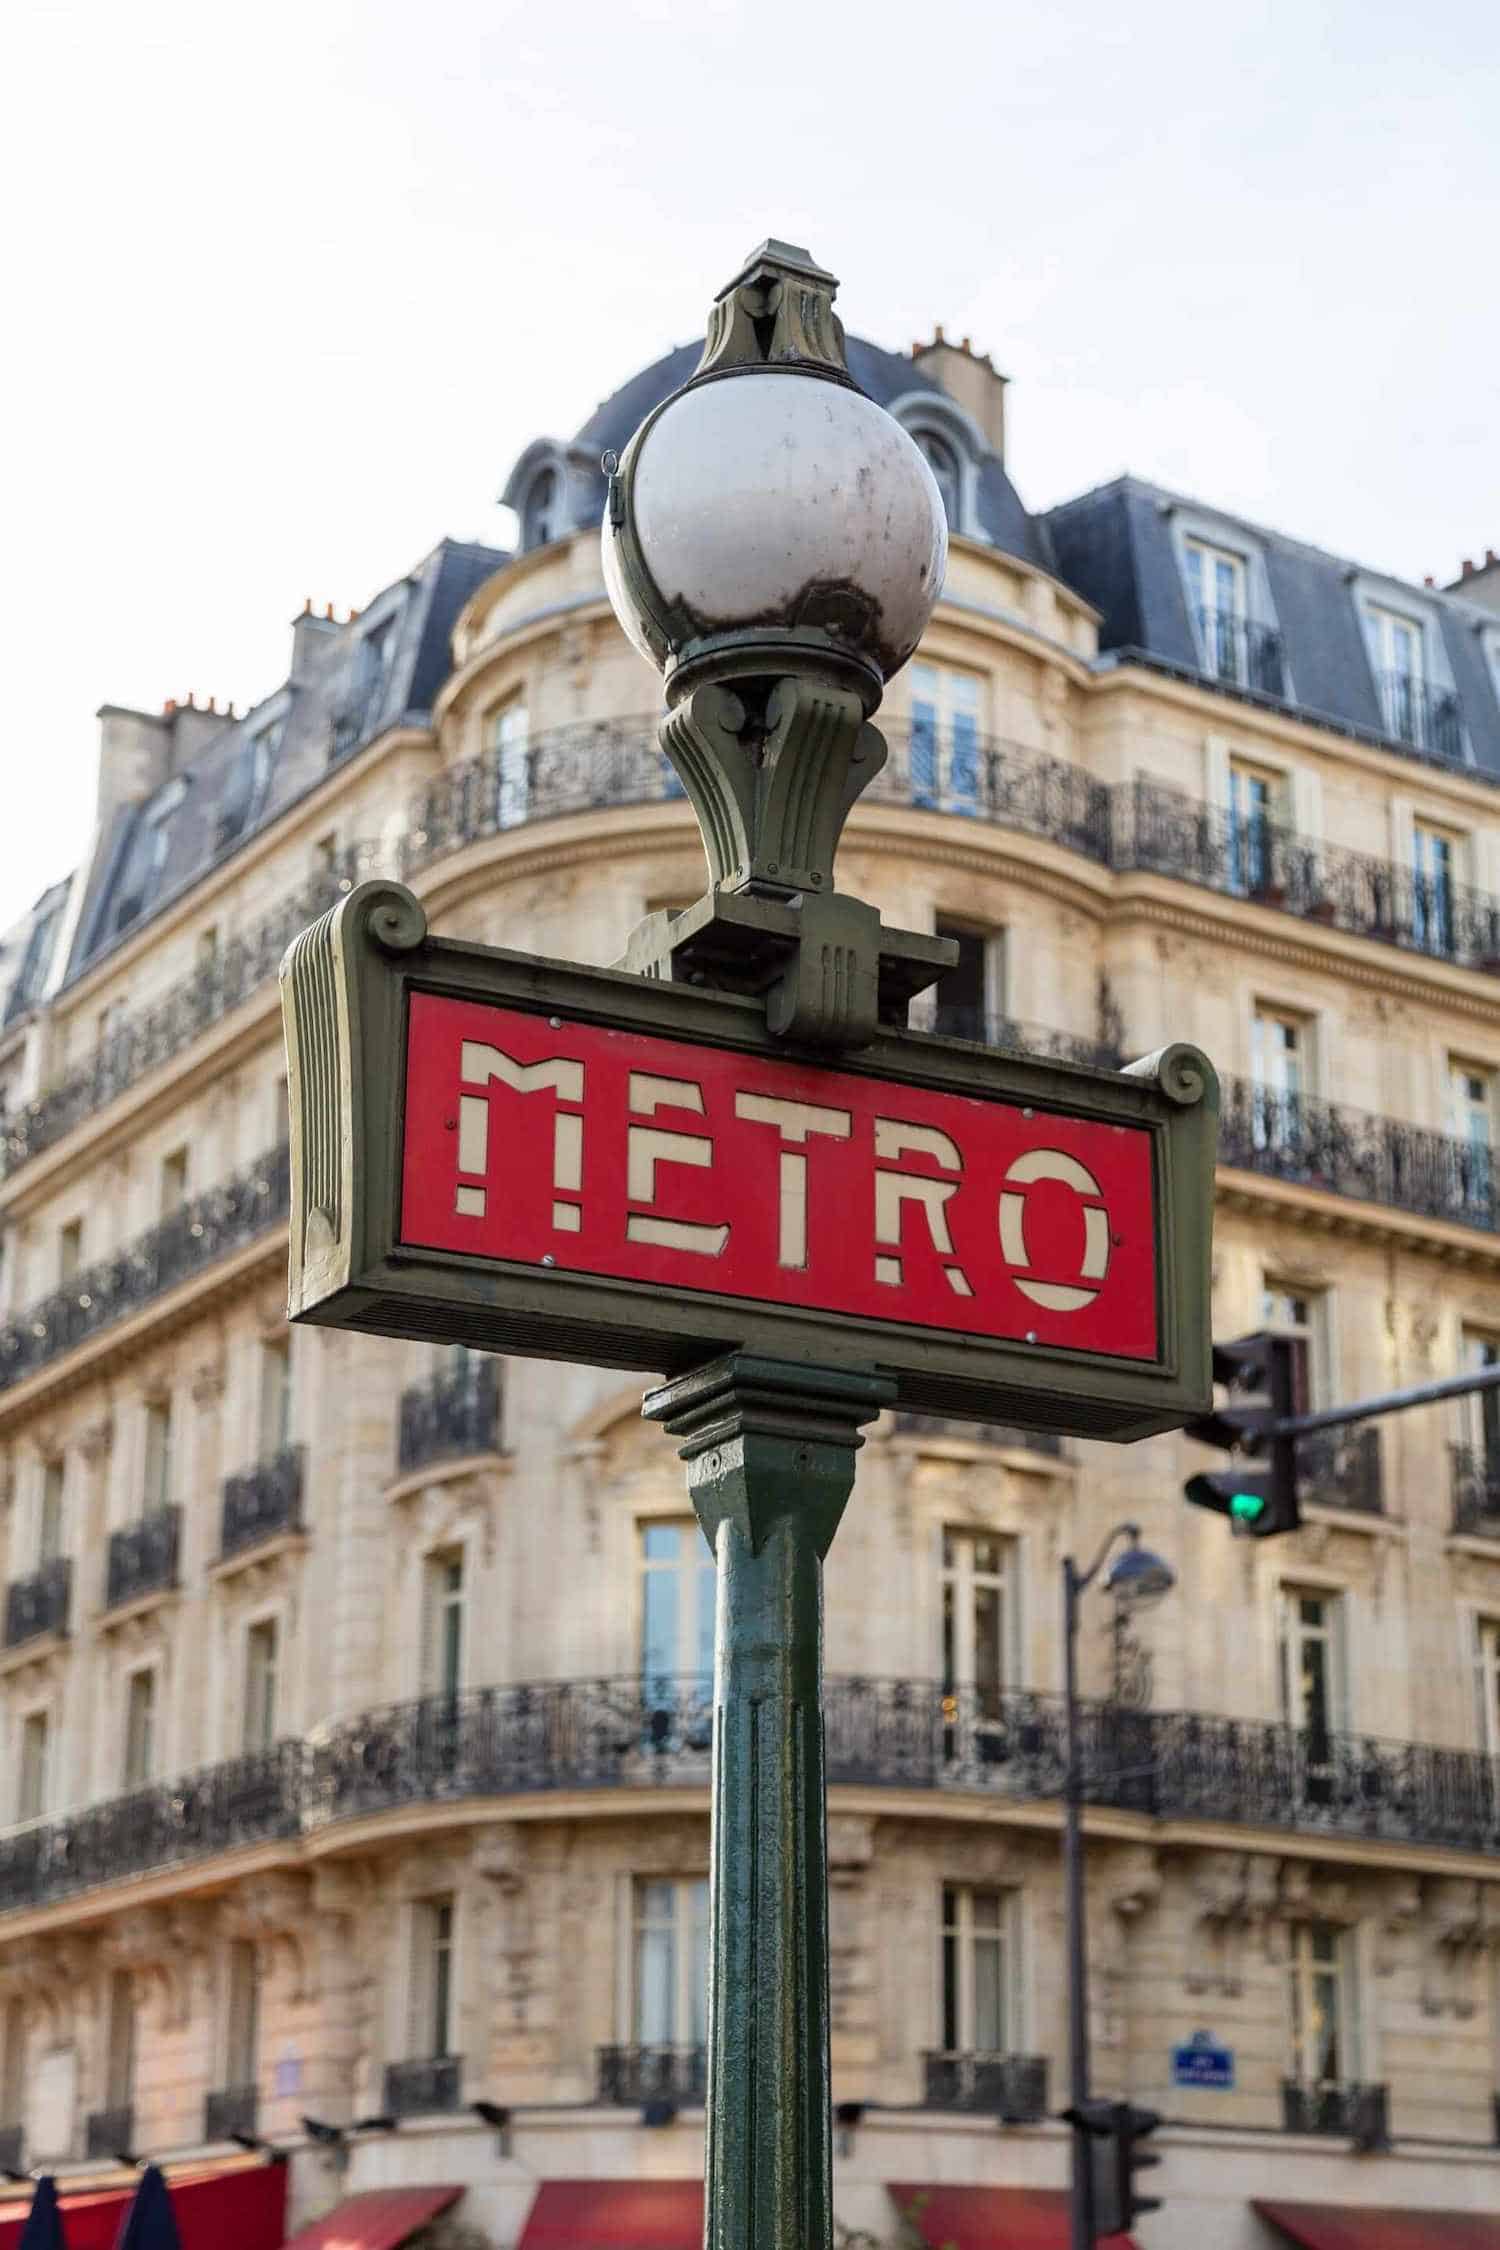 Metro Station, Paris